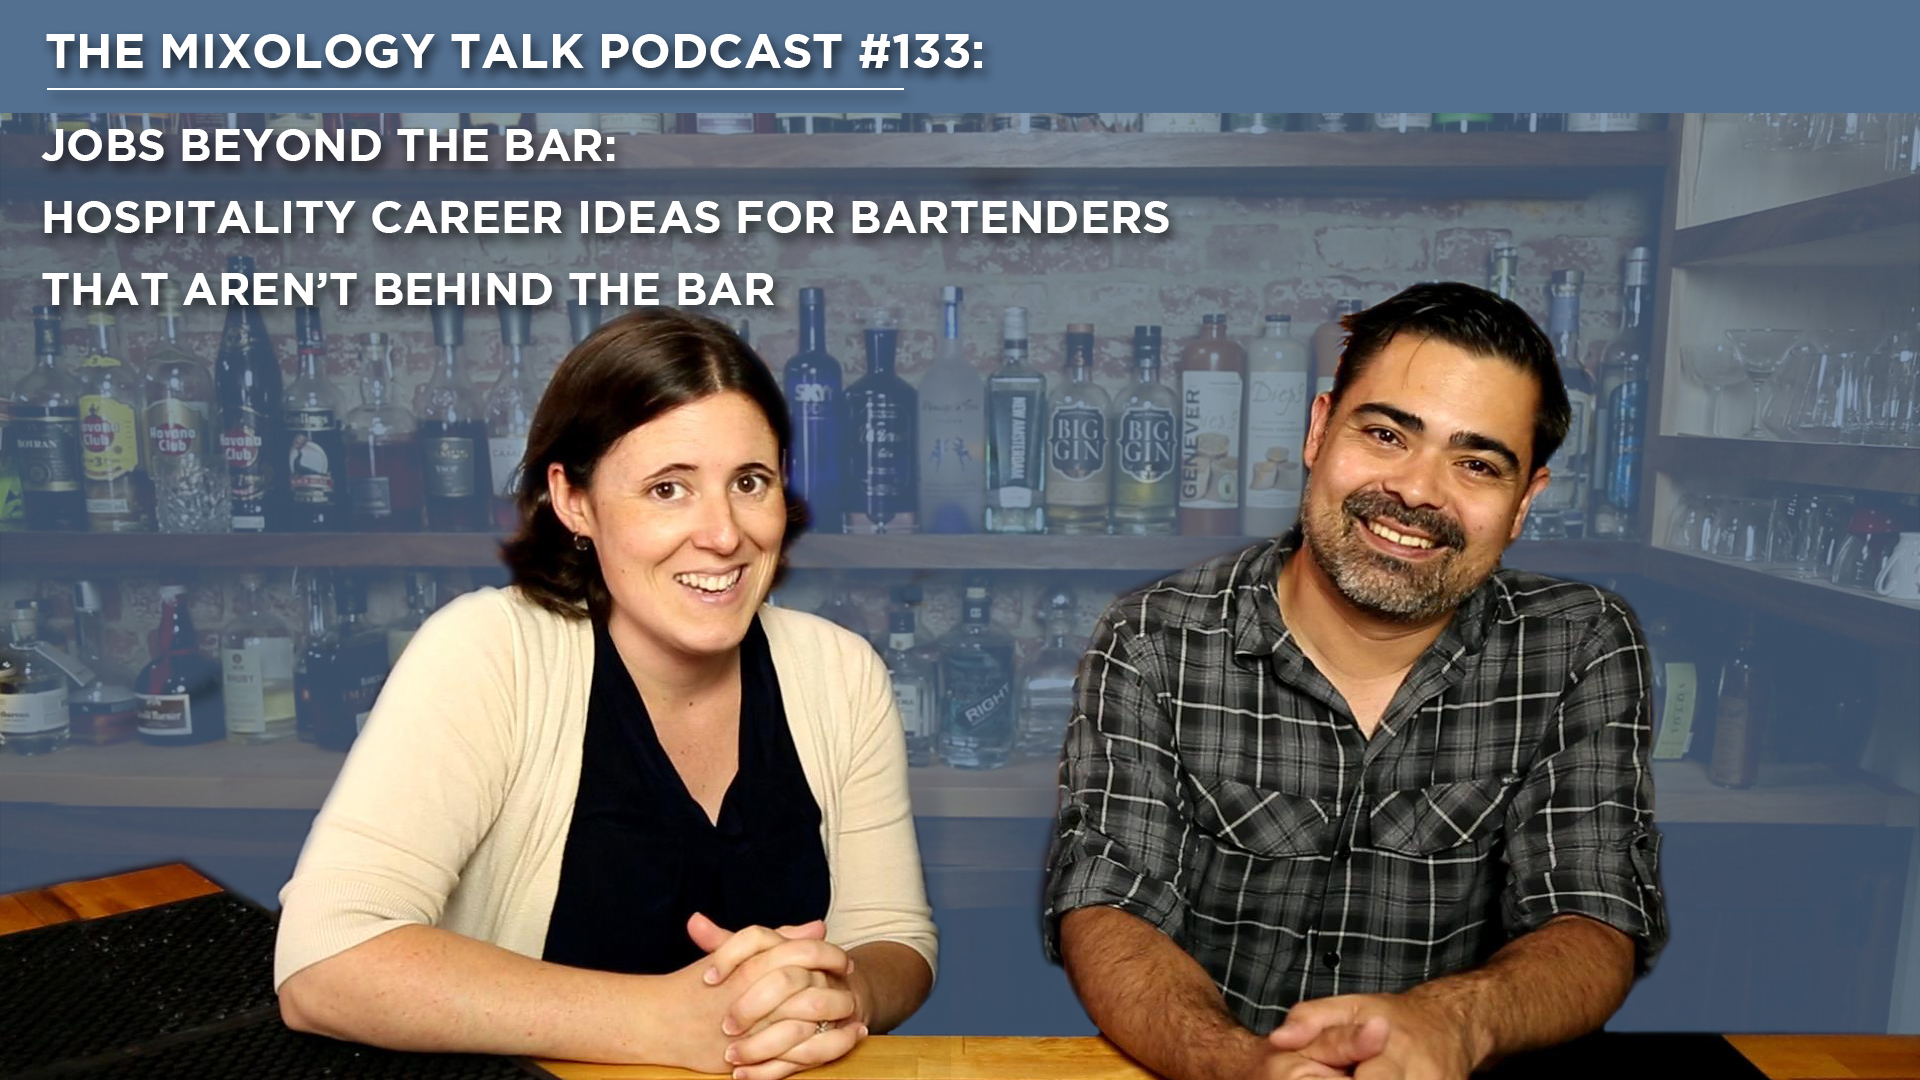 Jobs Beyond the Bar: Hospitality Career Ideas for Bartenders that aren